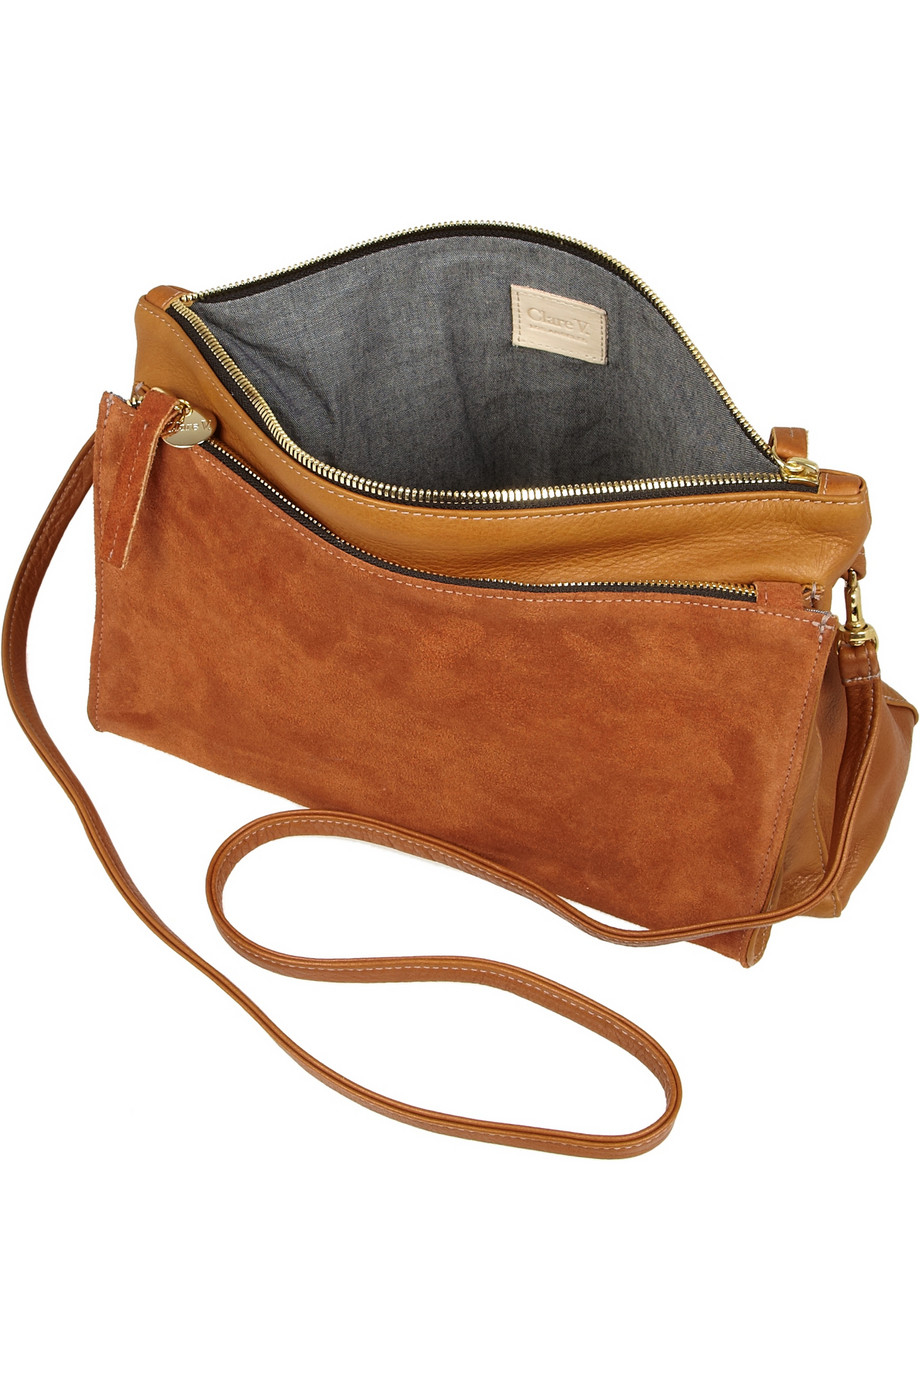 Clare V. Leather Shoulder Bag - Brown Crossbody Bags, Handbags - W2437279